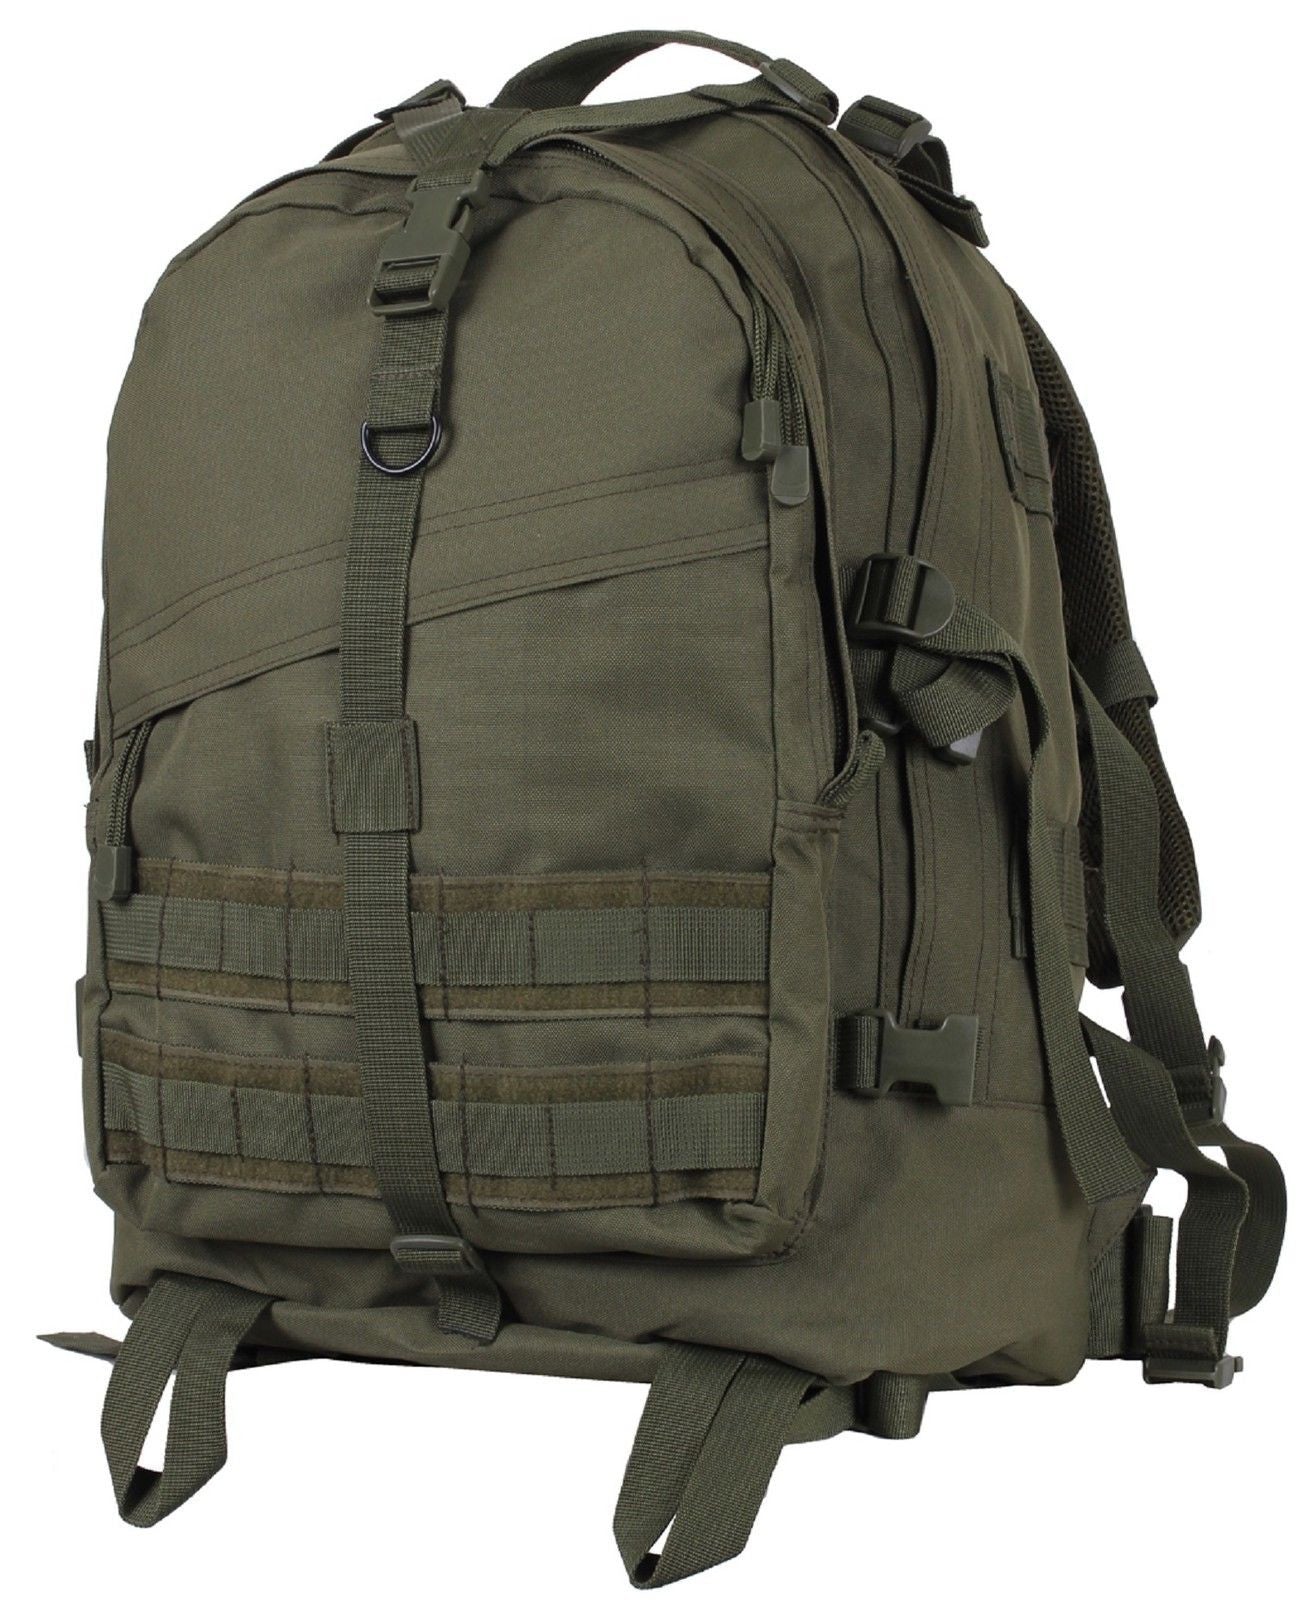 Rothco Olive Drab Large Transport Pack - 19" Hiking & Hunting Backpack Bag 72870